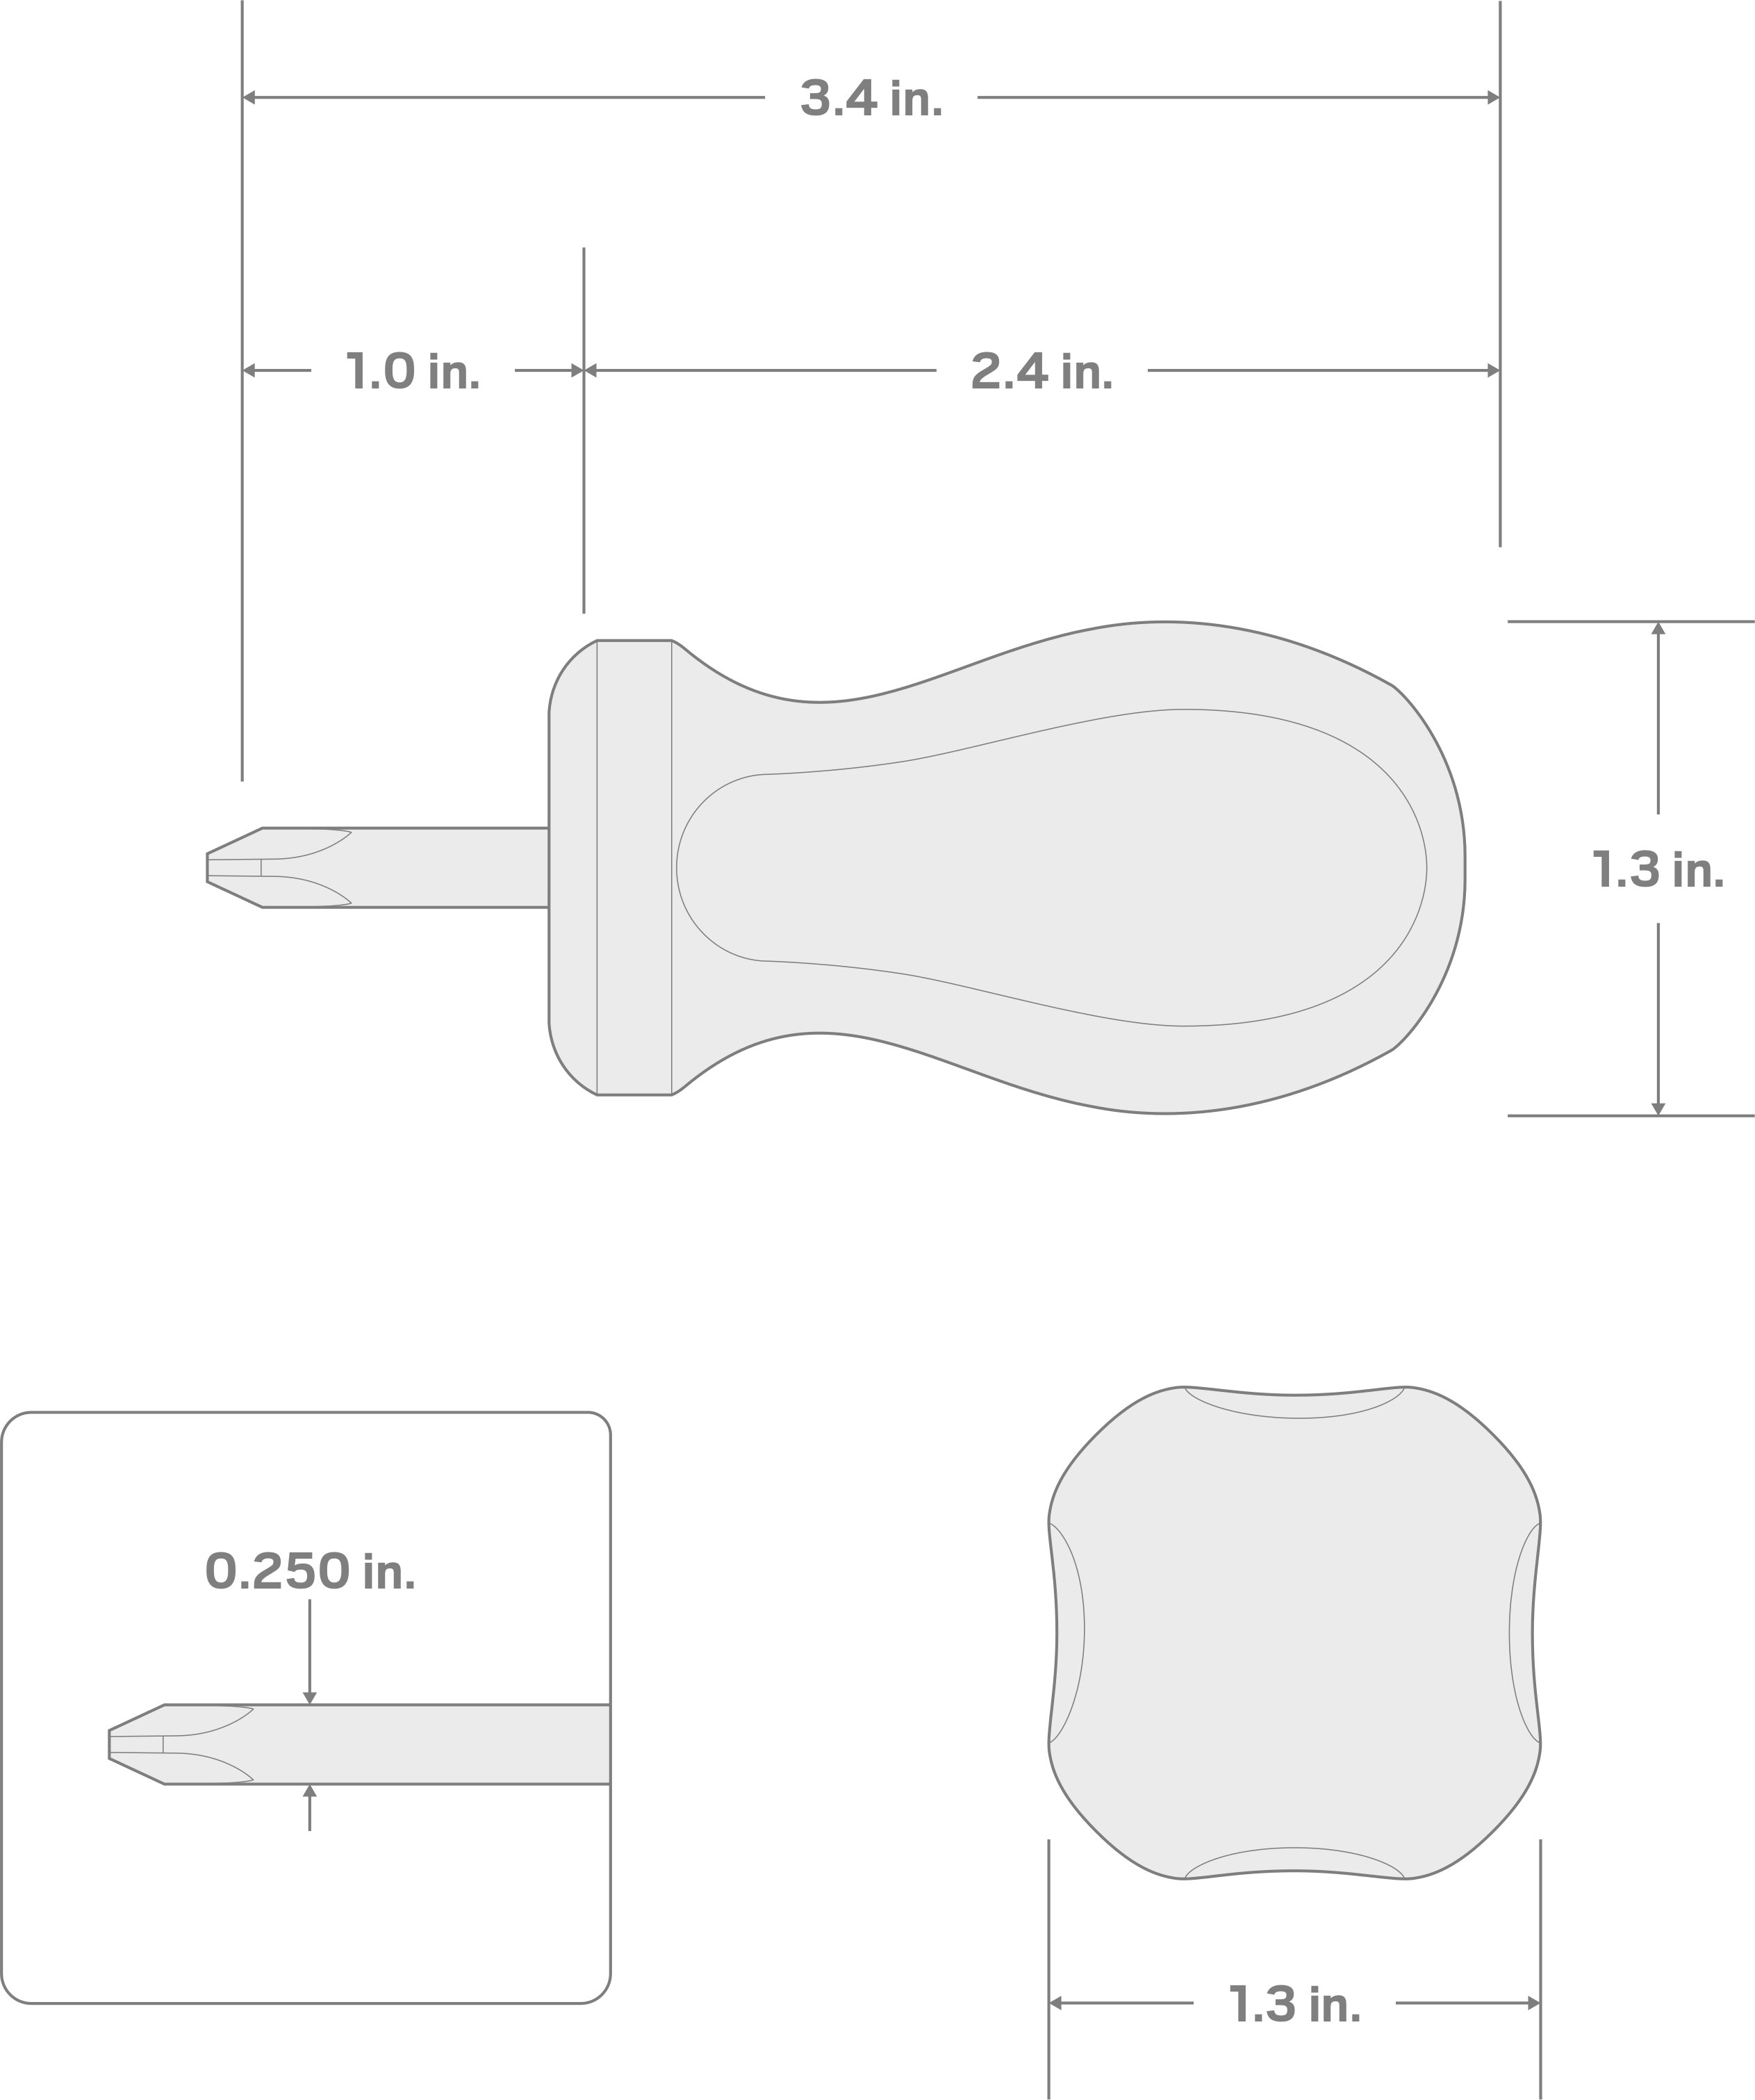 Specs for Stubby #2 Phillips Hard Handle Black Oxide Blade Screwdriver